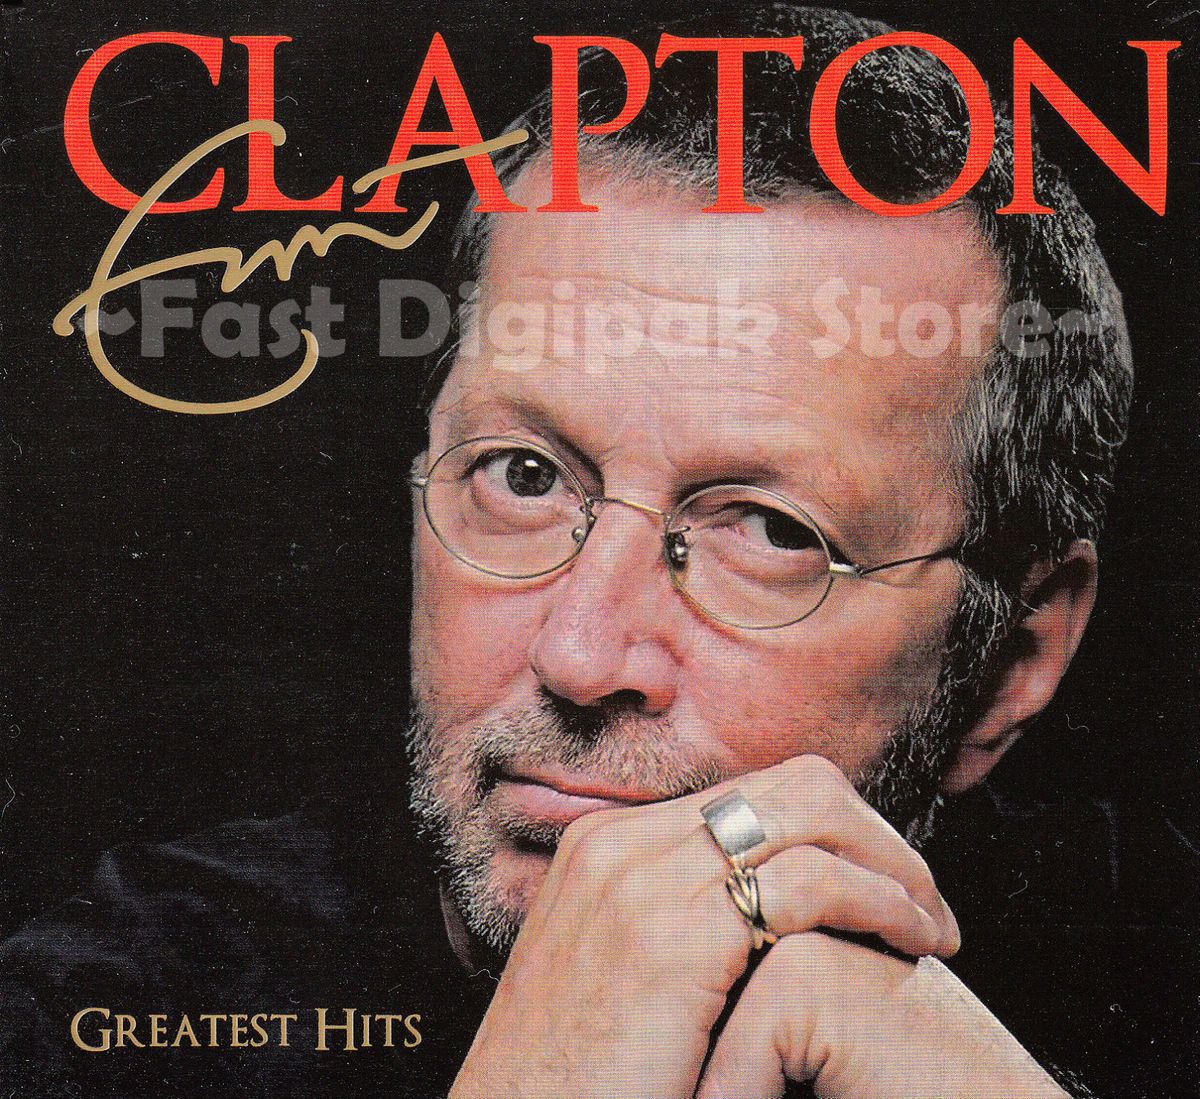 Eric Clapton Greatest Hits 2011 2CD Digipak Same Day Shipping from USA